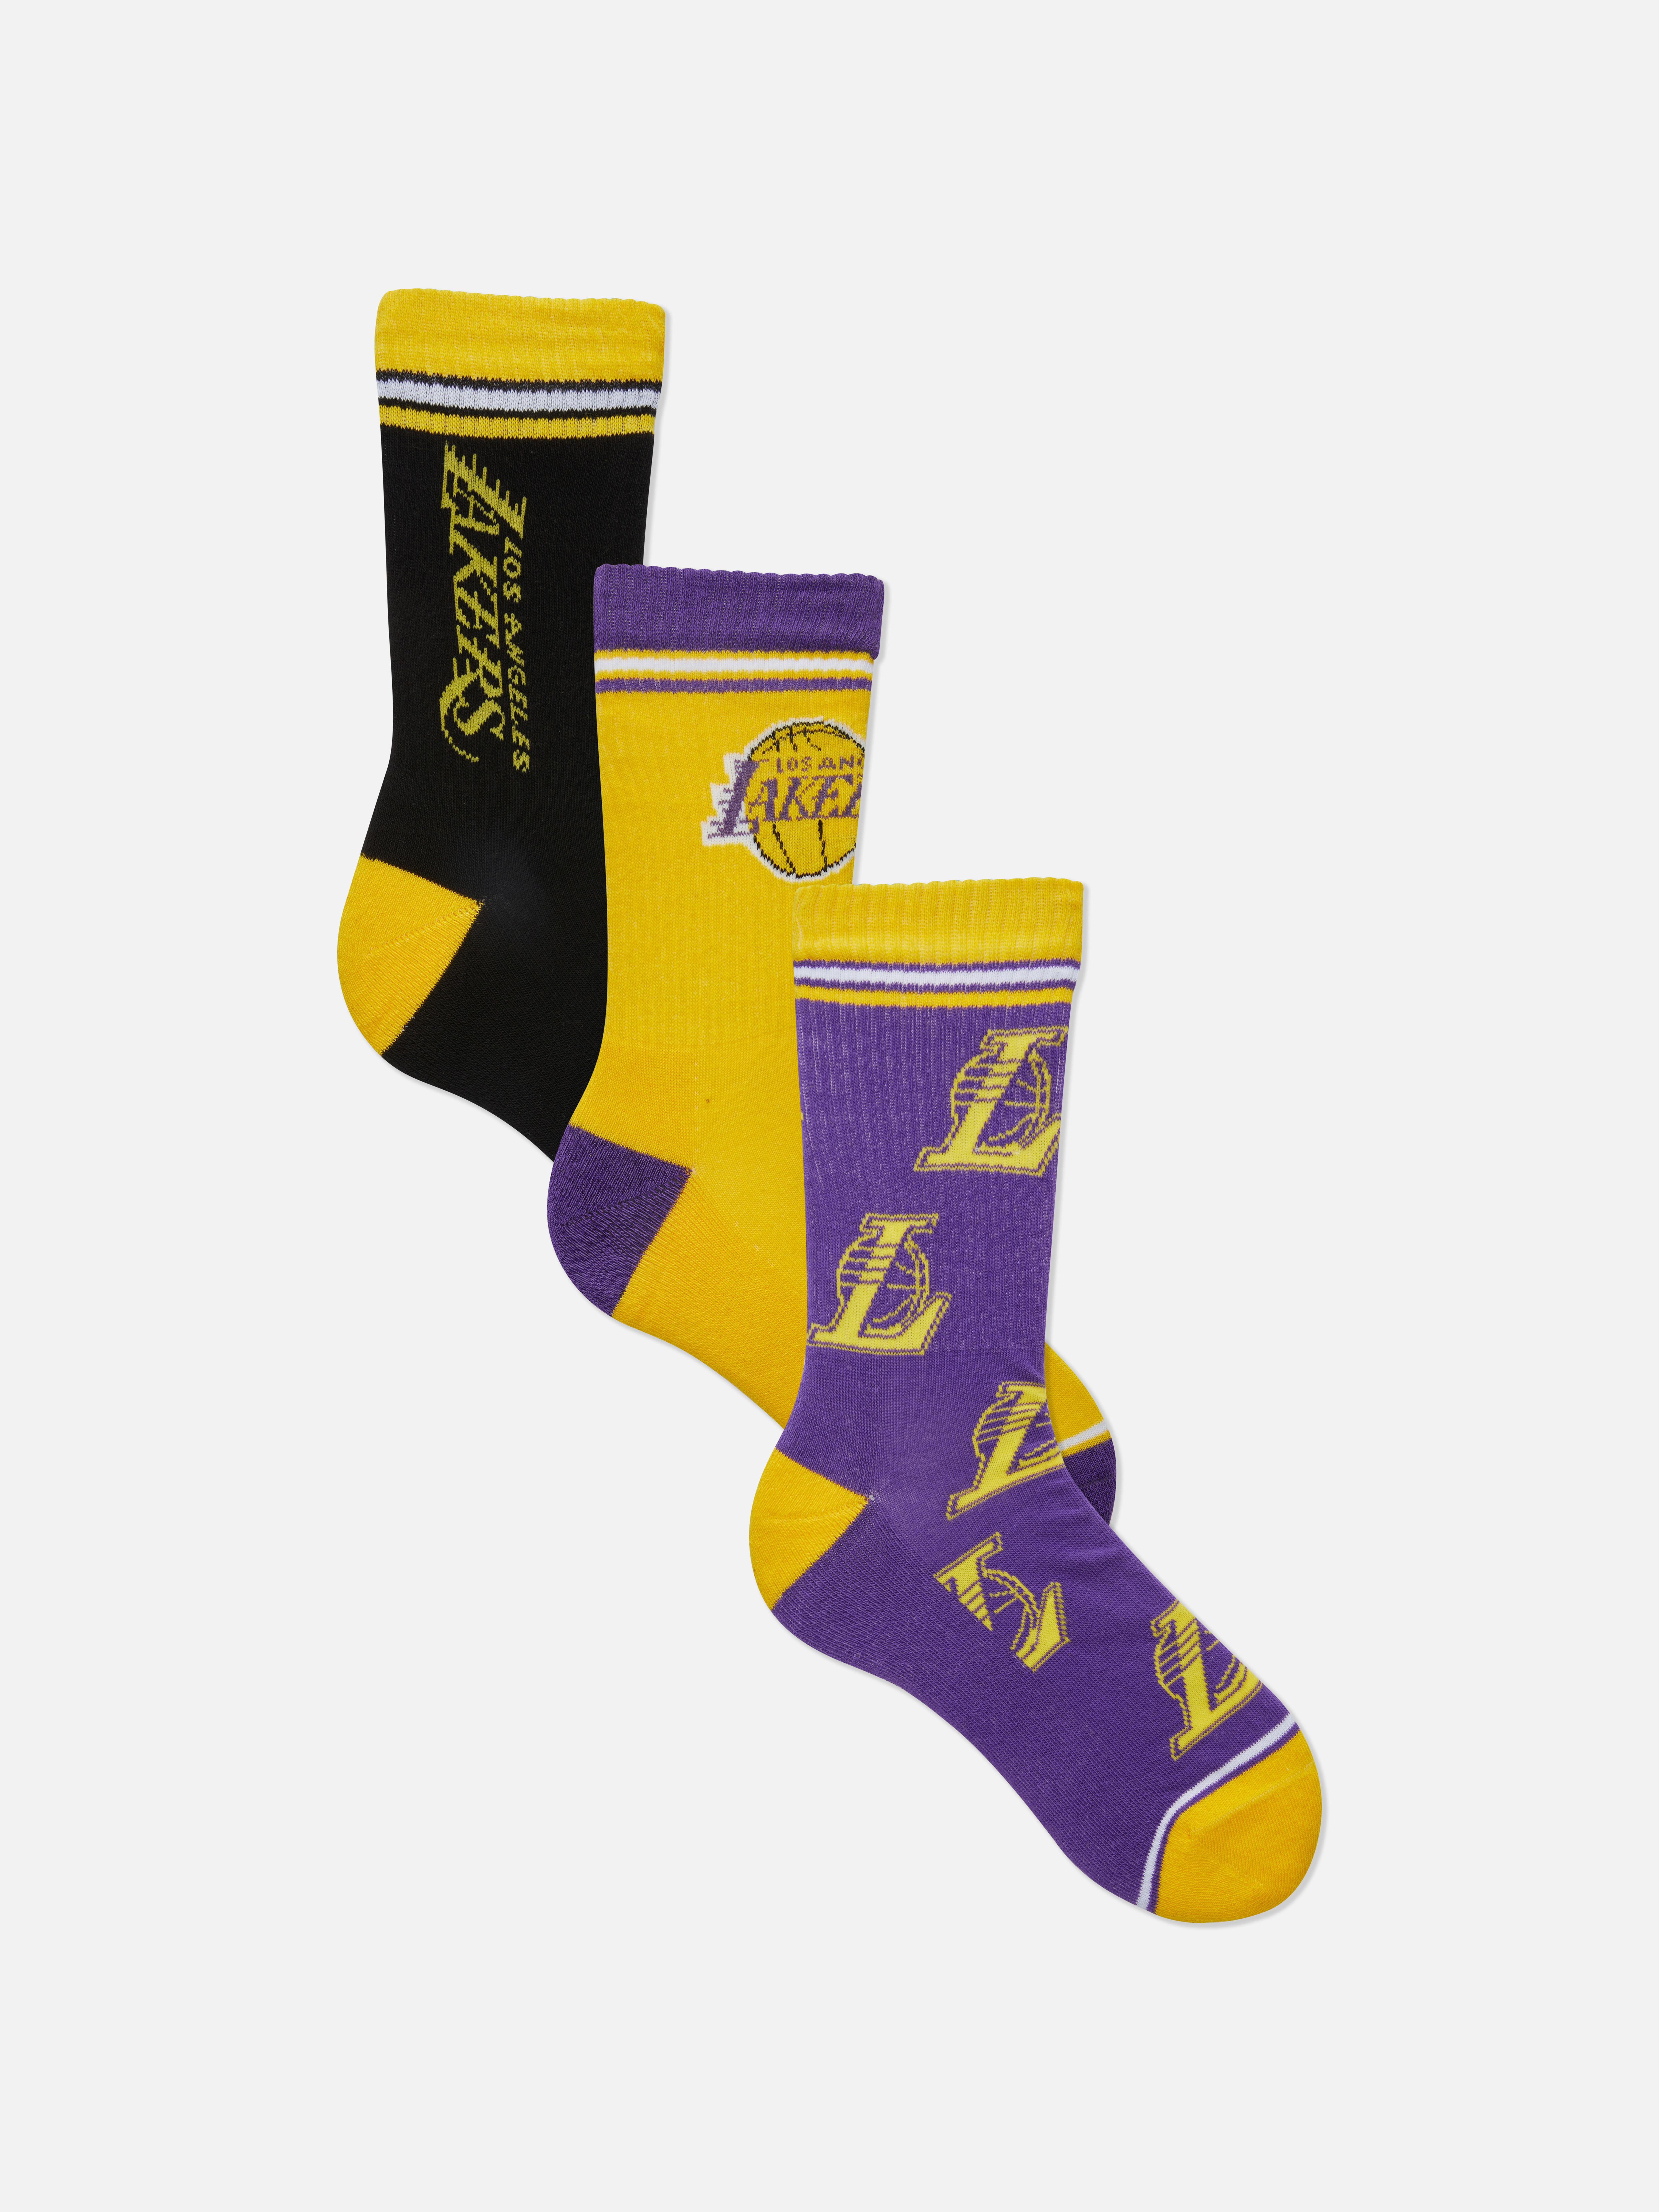 „NBA Los Angeles Lakers“ Söckchen, 3er-Pack